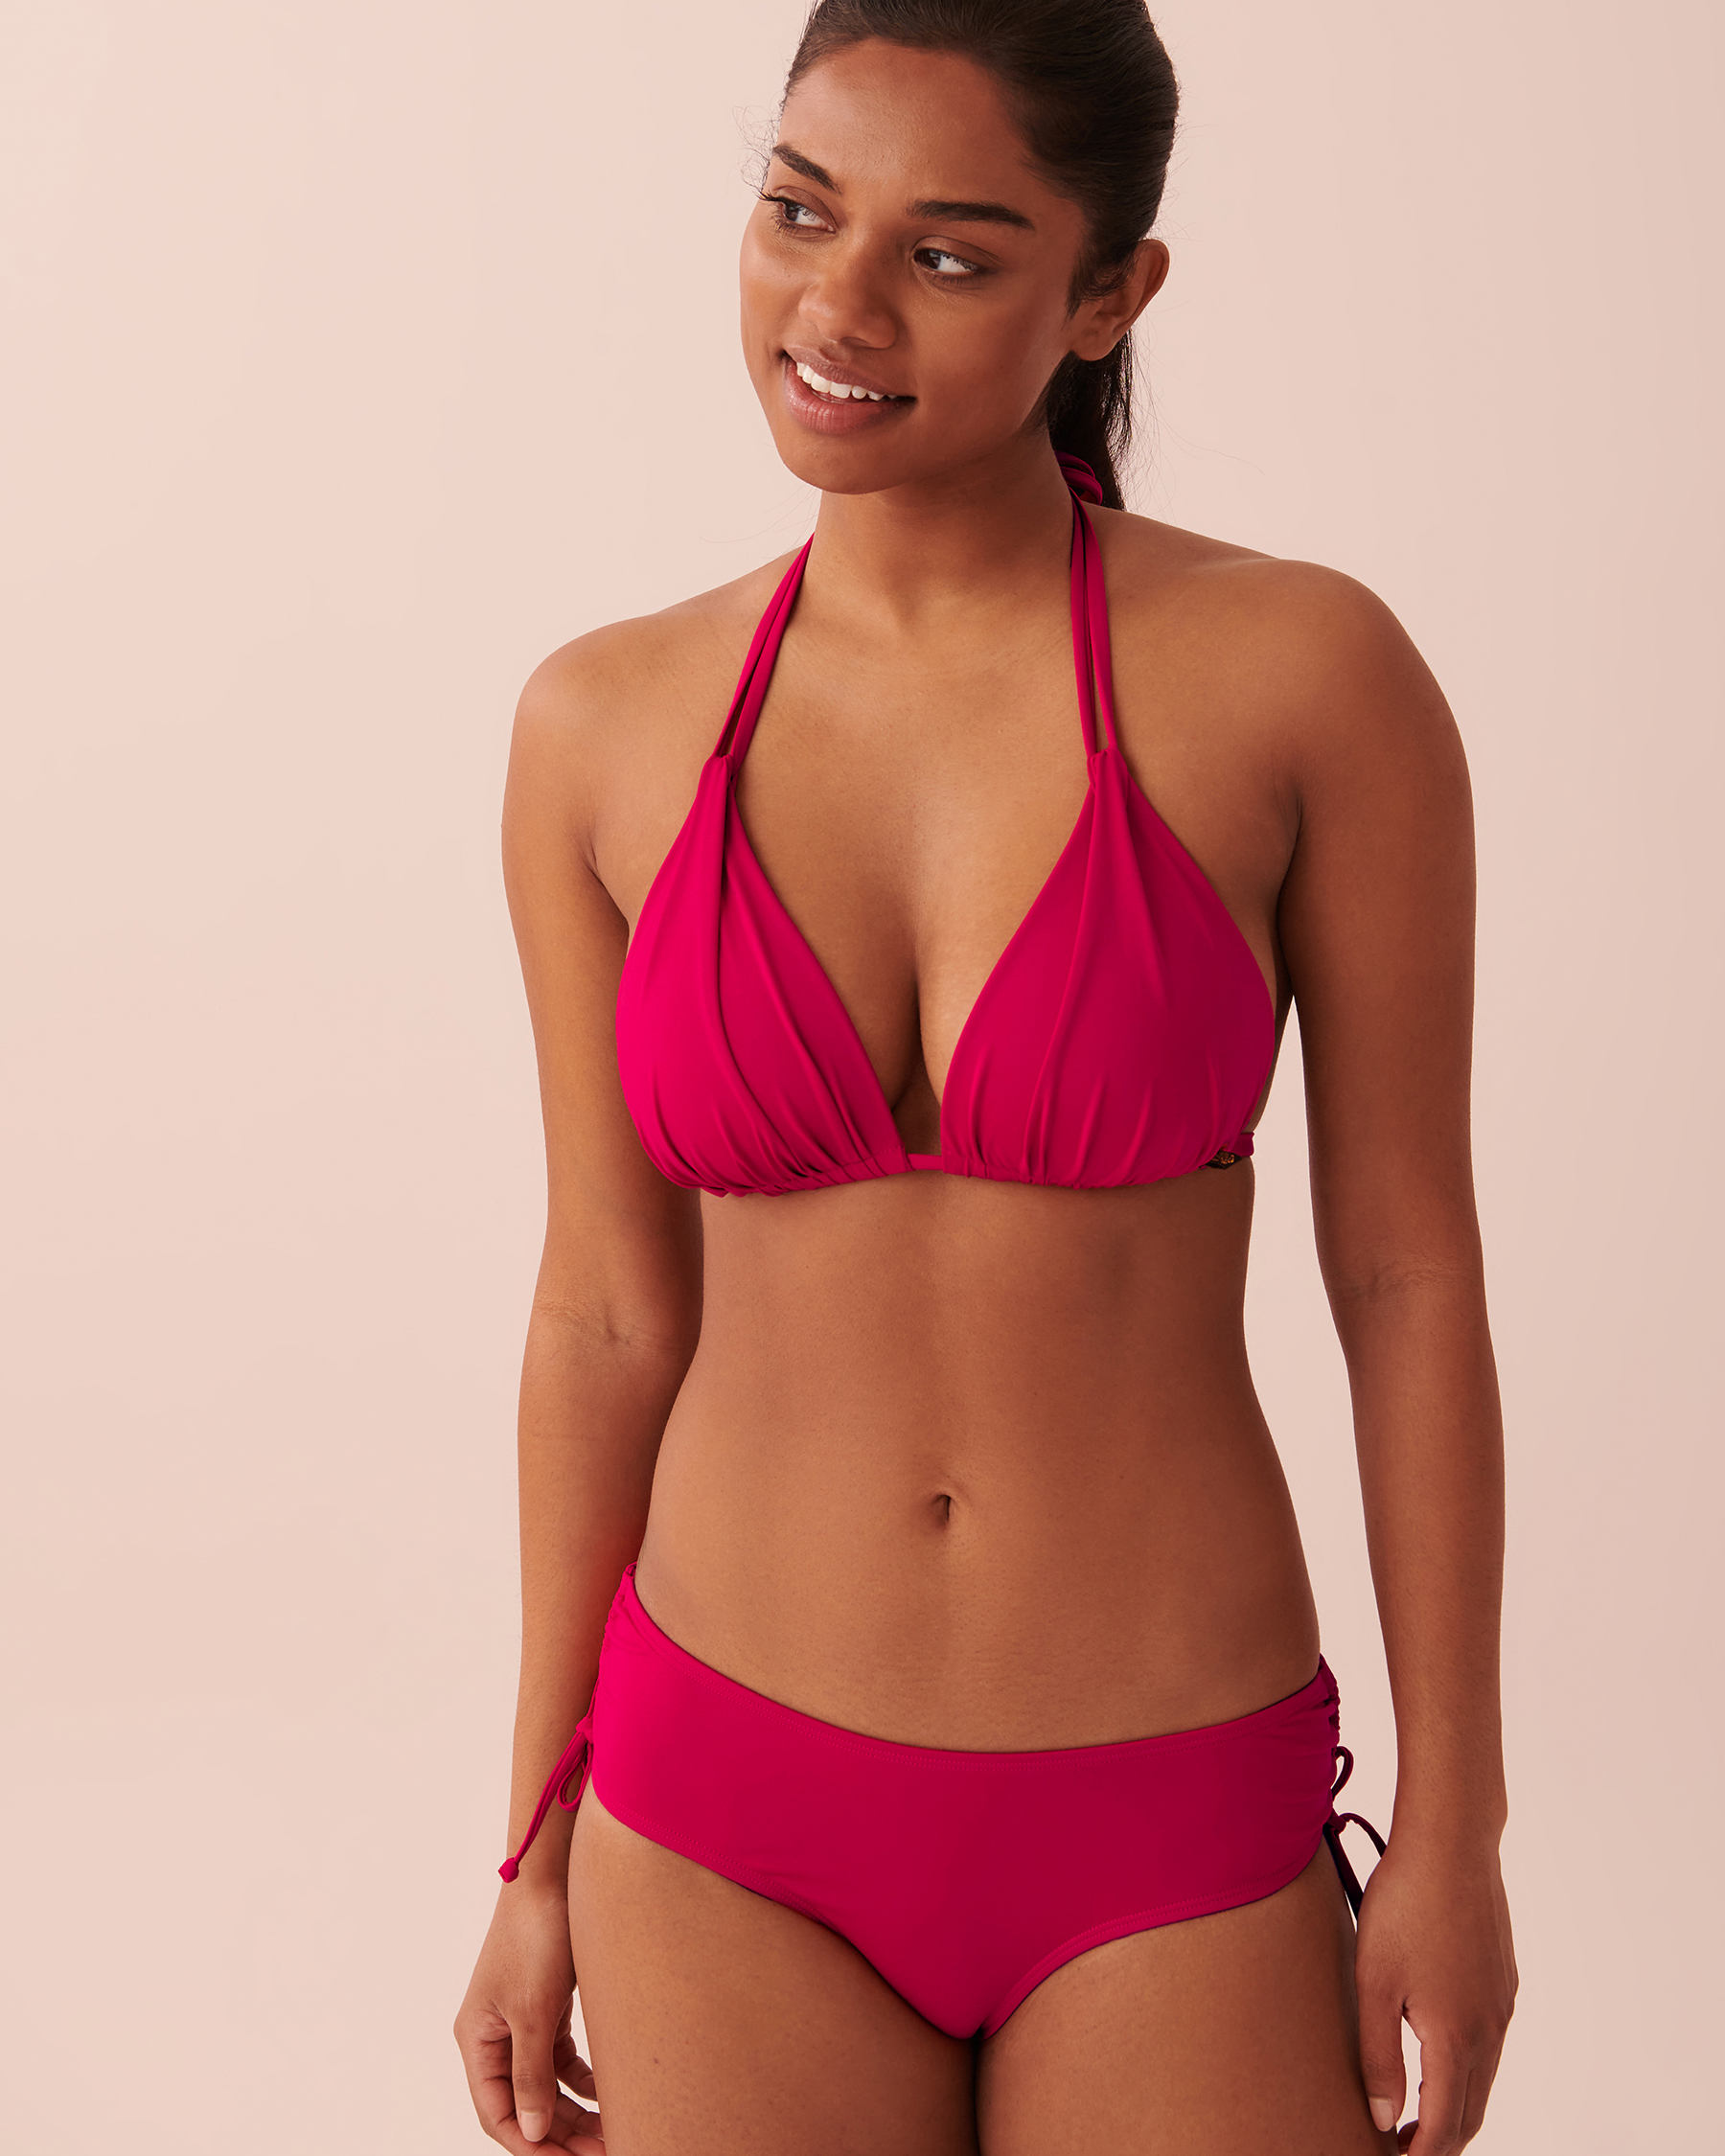 LA VIE EN ROSE AQUA BRIGHT ROSE Recycled Fibers Triangle Bikini Top Bright pink 70100481 - View3